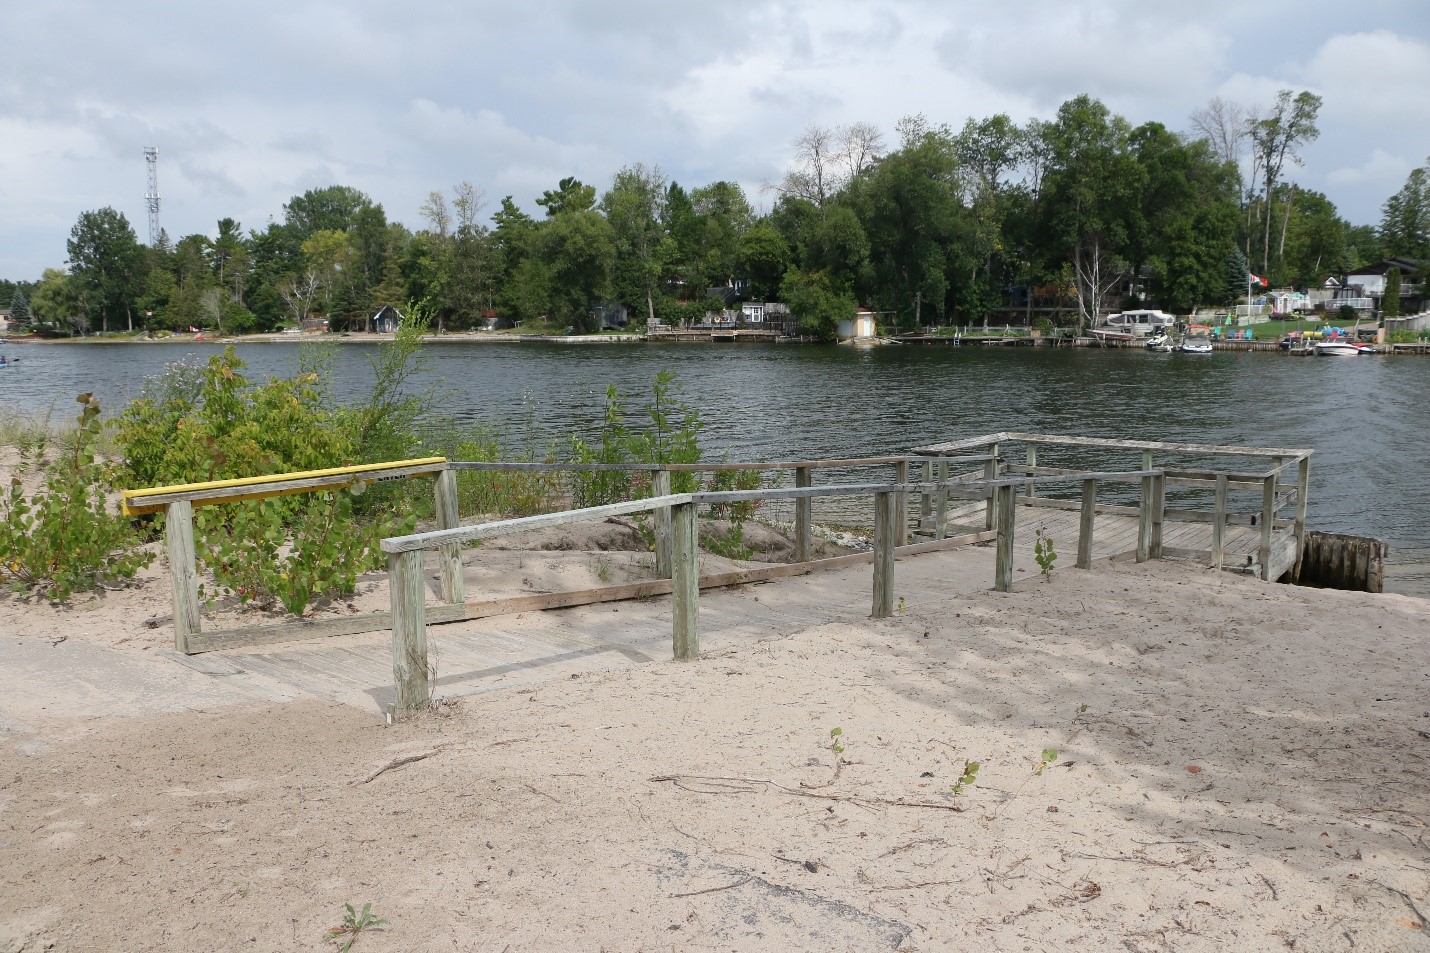 Fishing platform located in Beach Area 1.